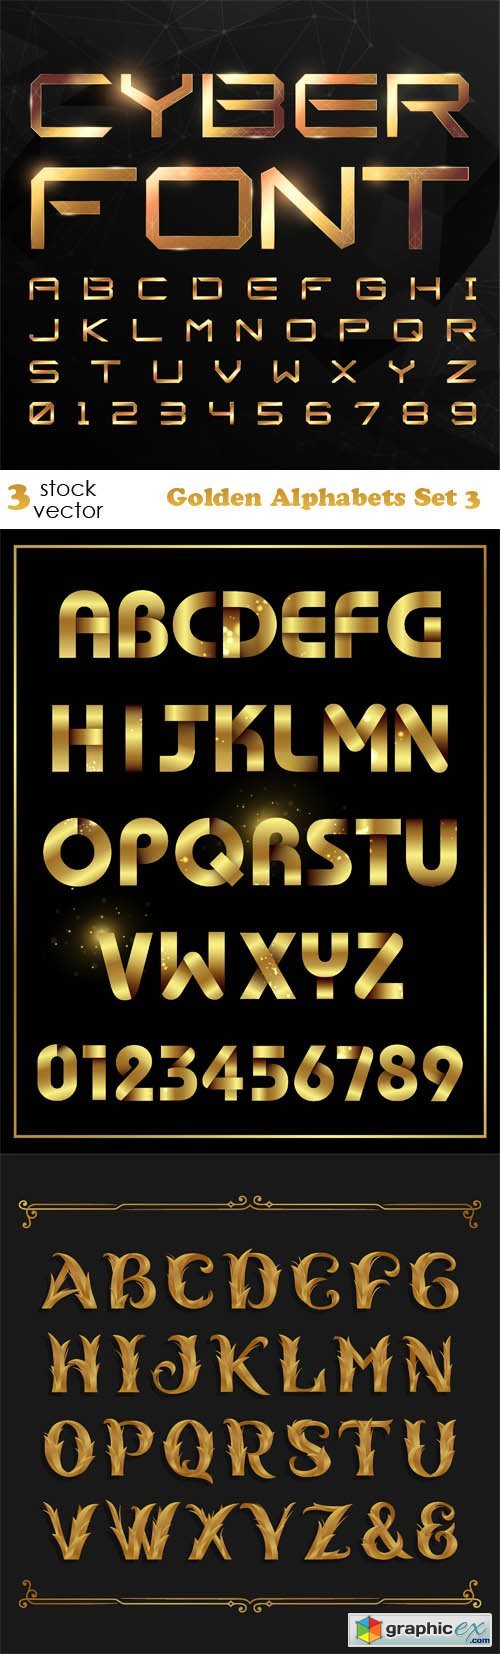 Golden Alphabets Set 3